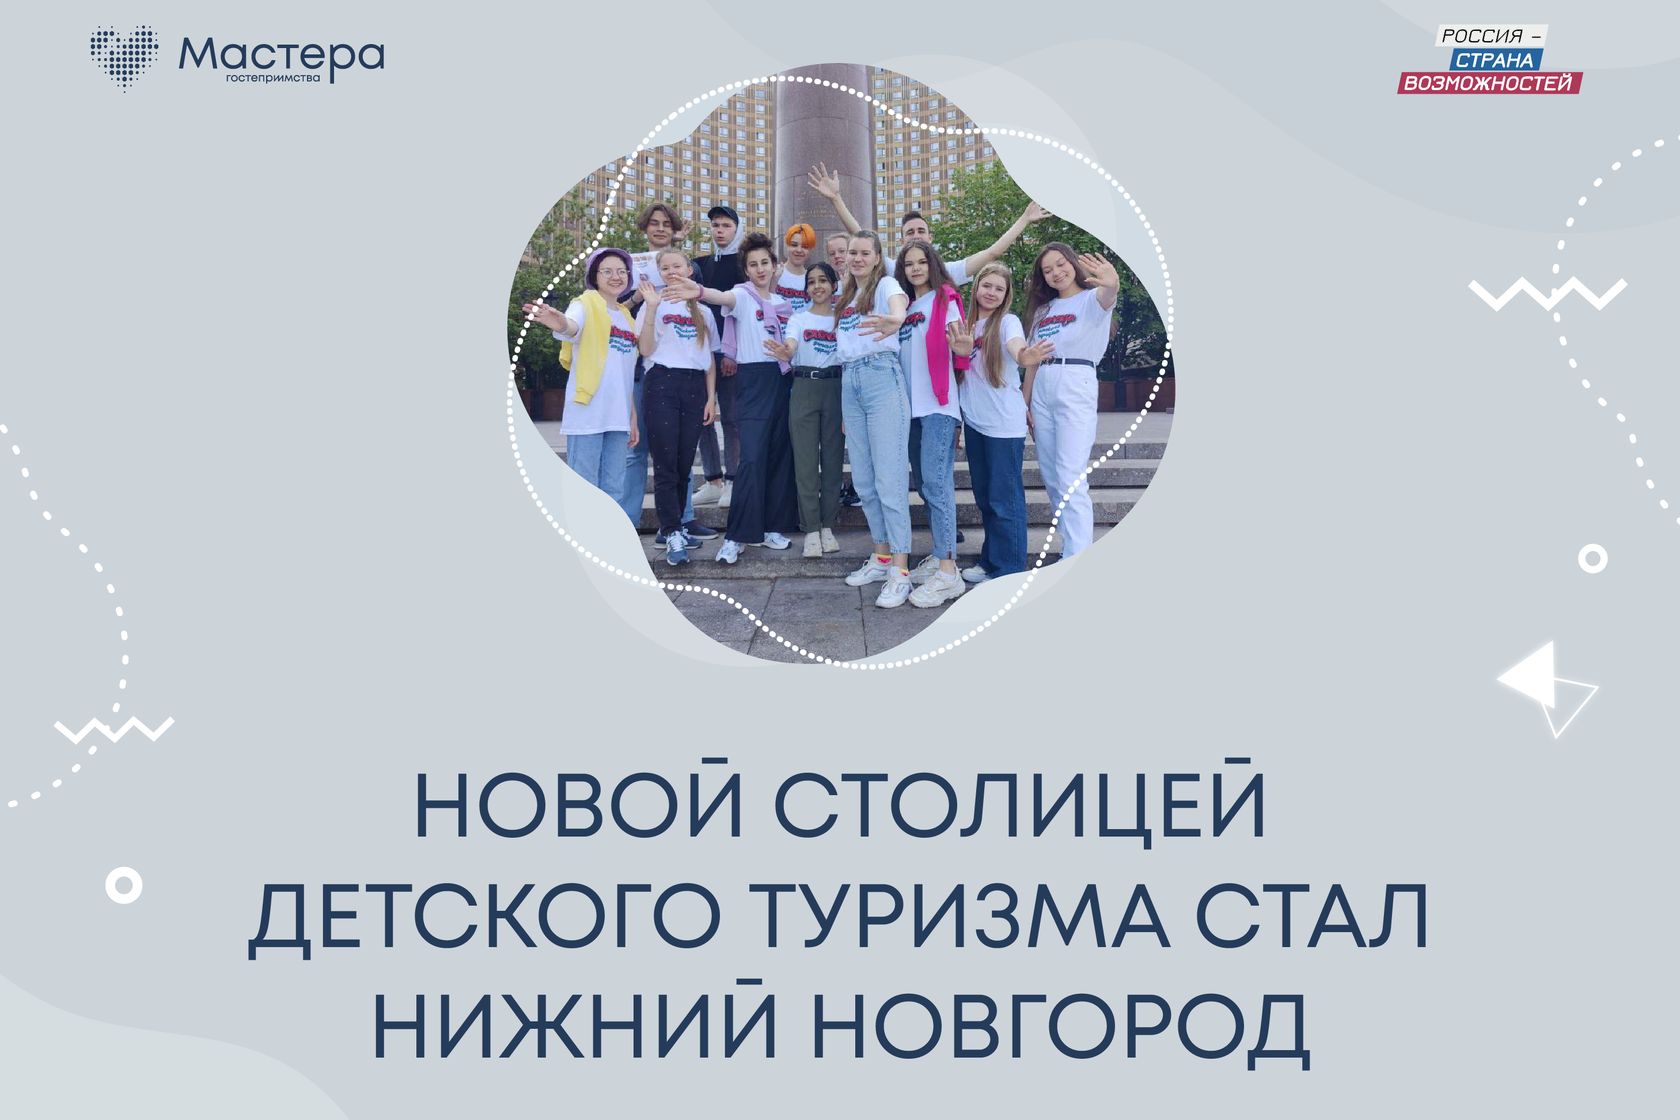 Нижний Новгород - столица детского туризма_welcomecup.rsv.ru.jpg